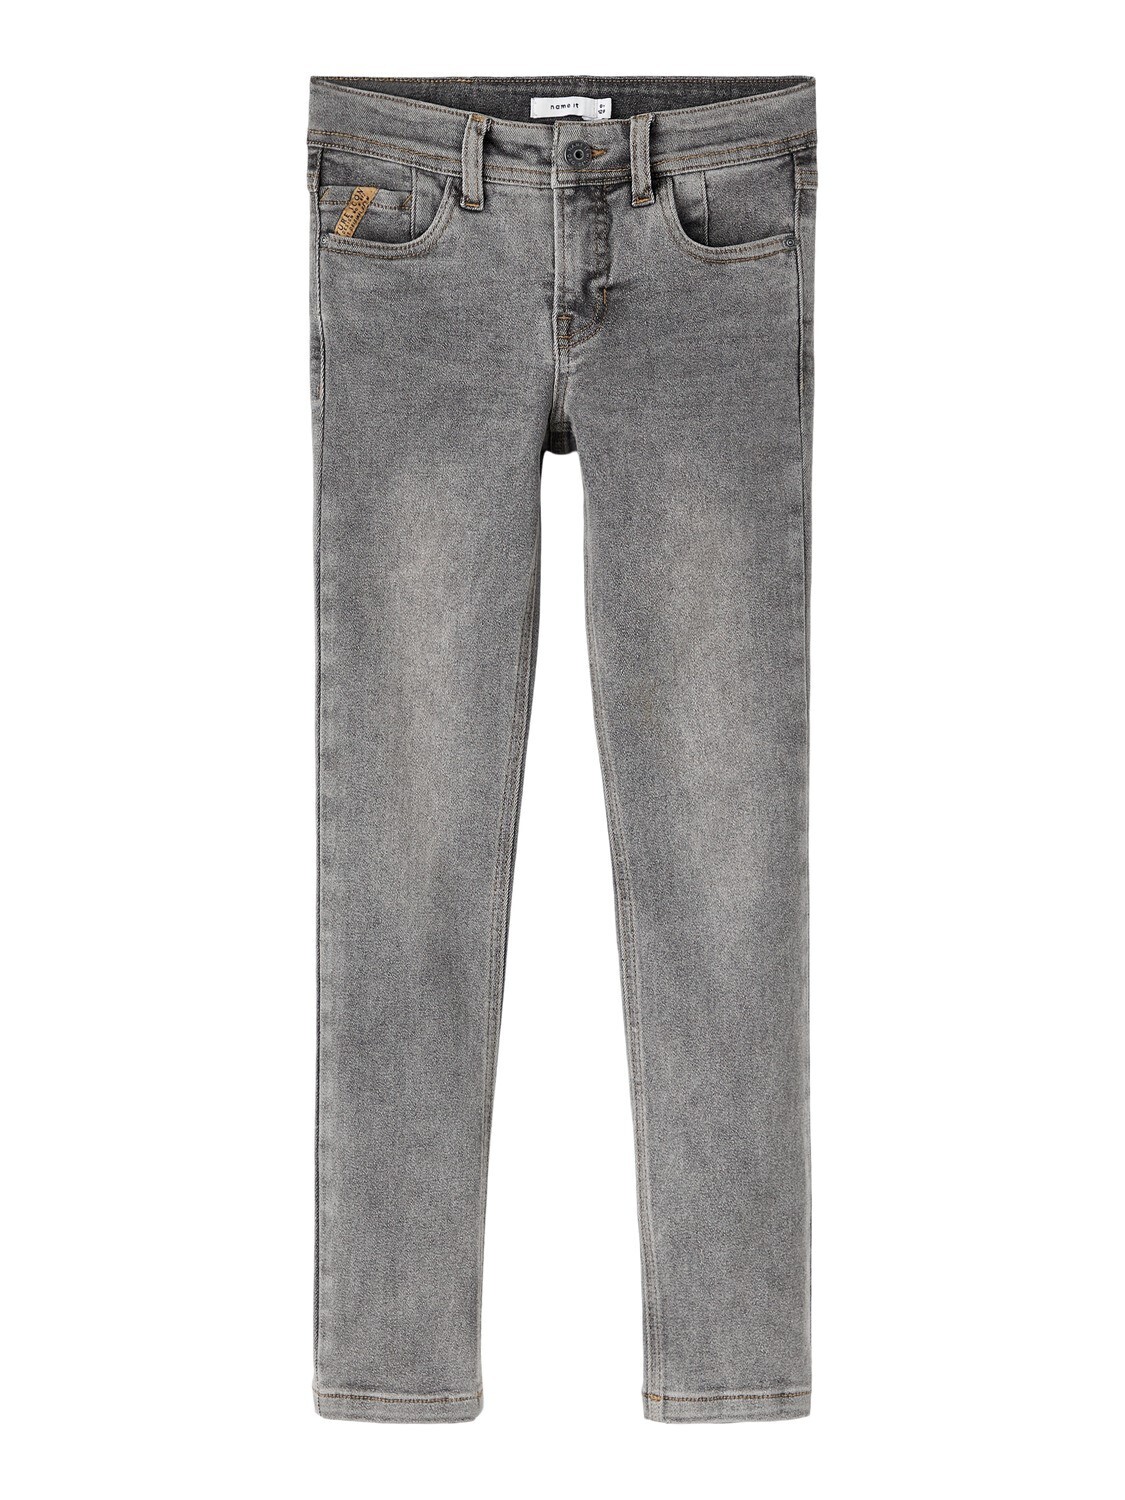 KIDS skinny jeans - PETE - dark grey denim